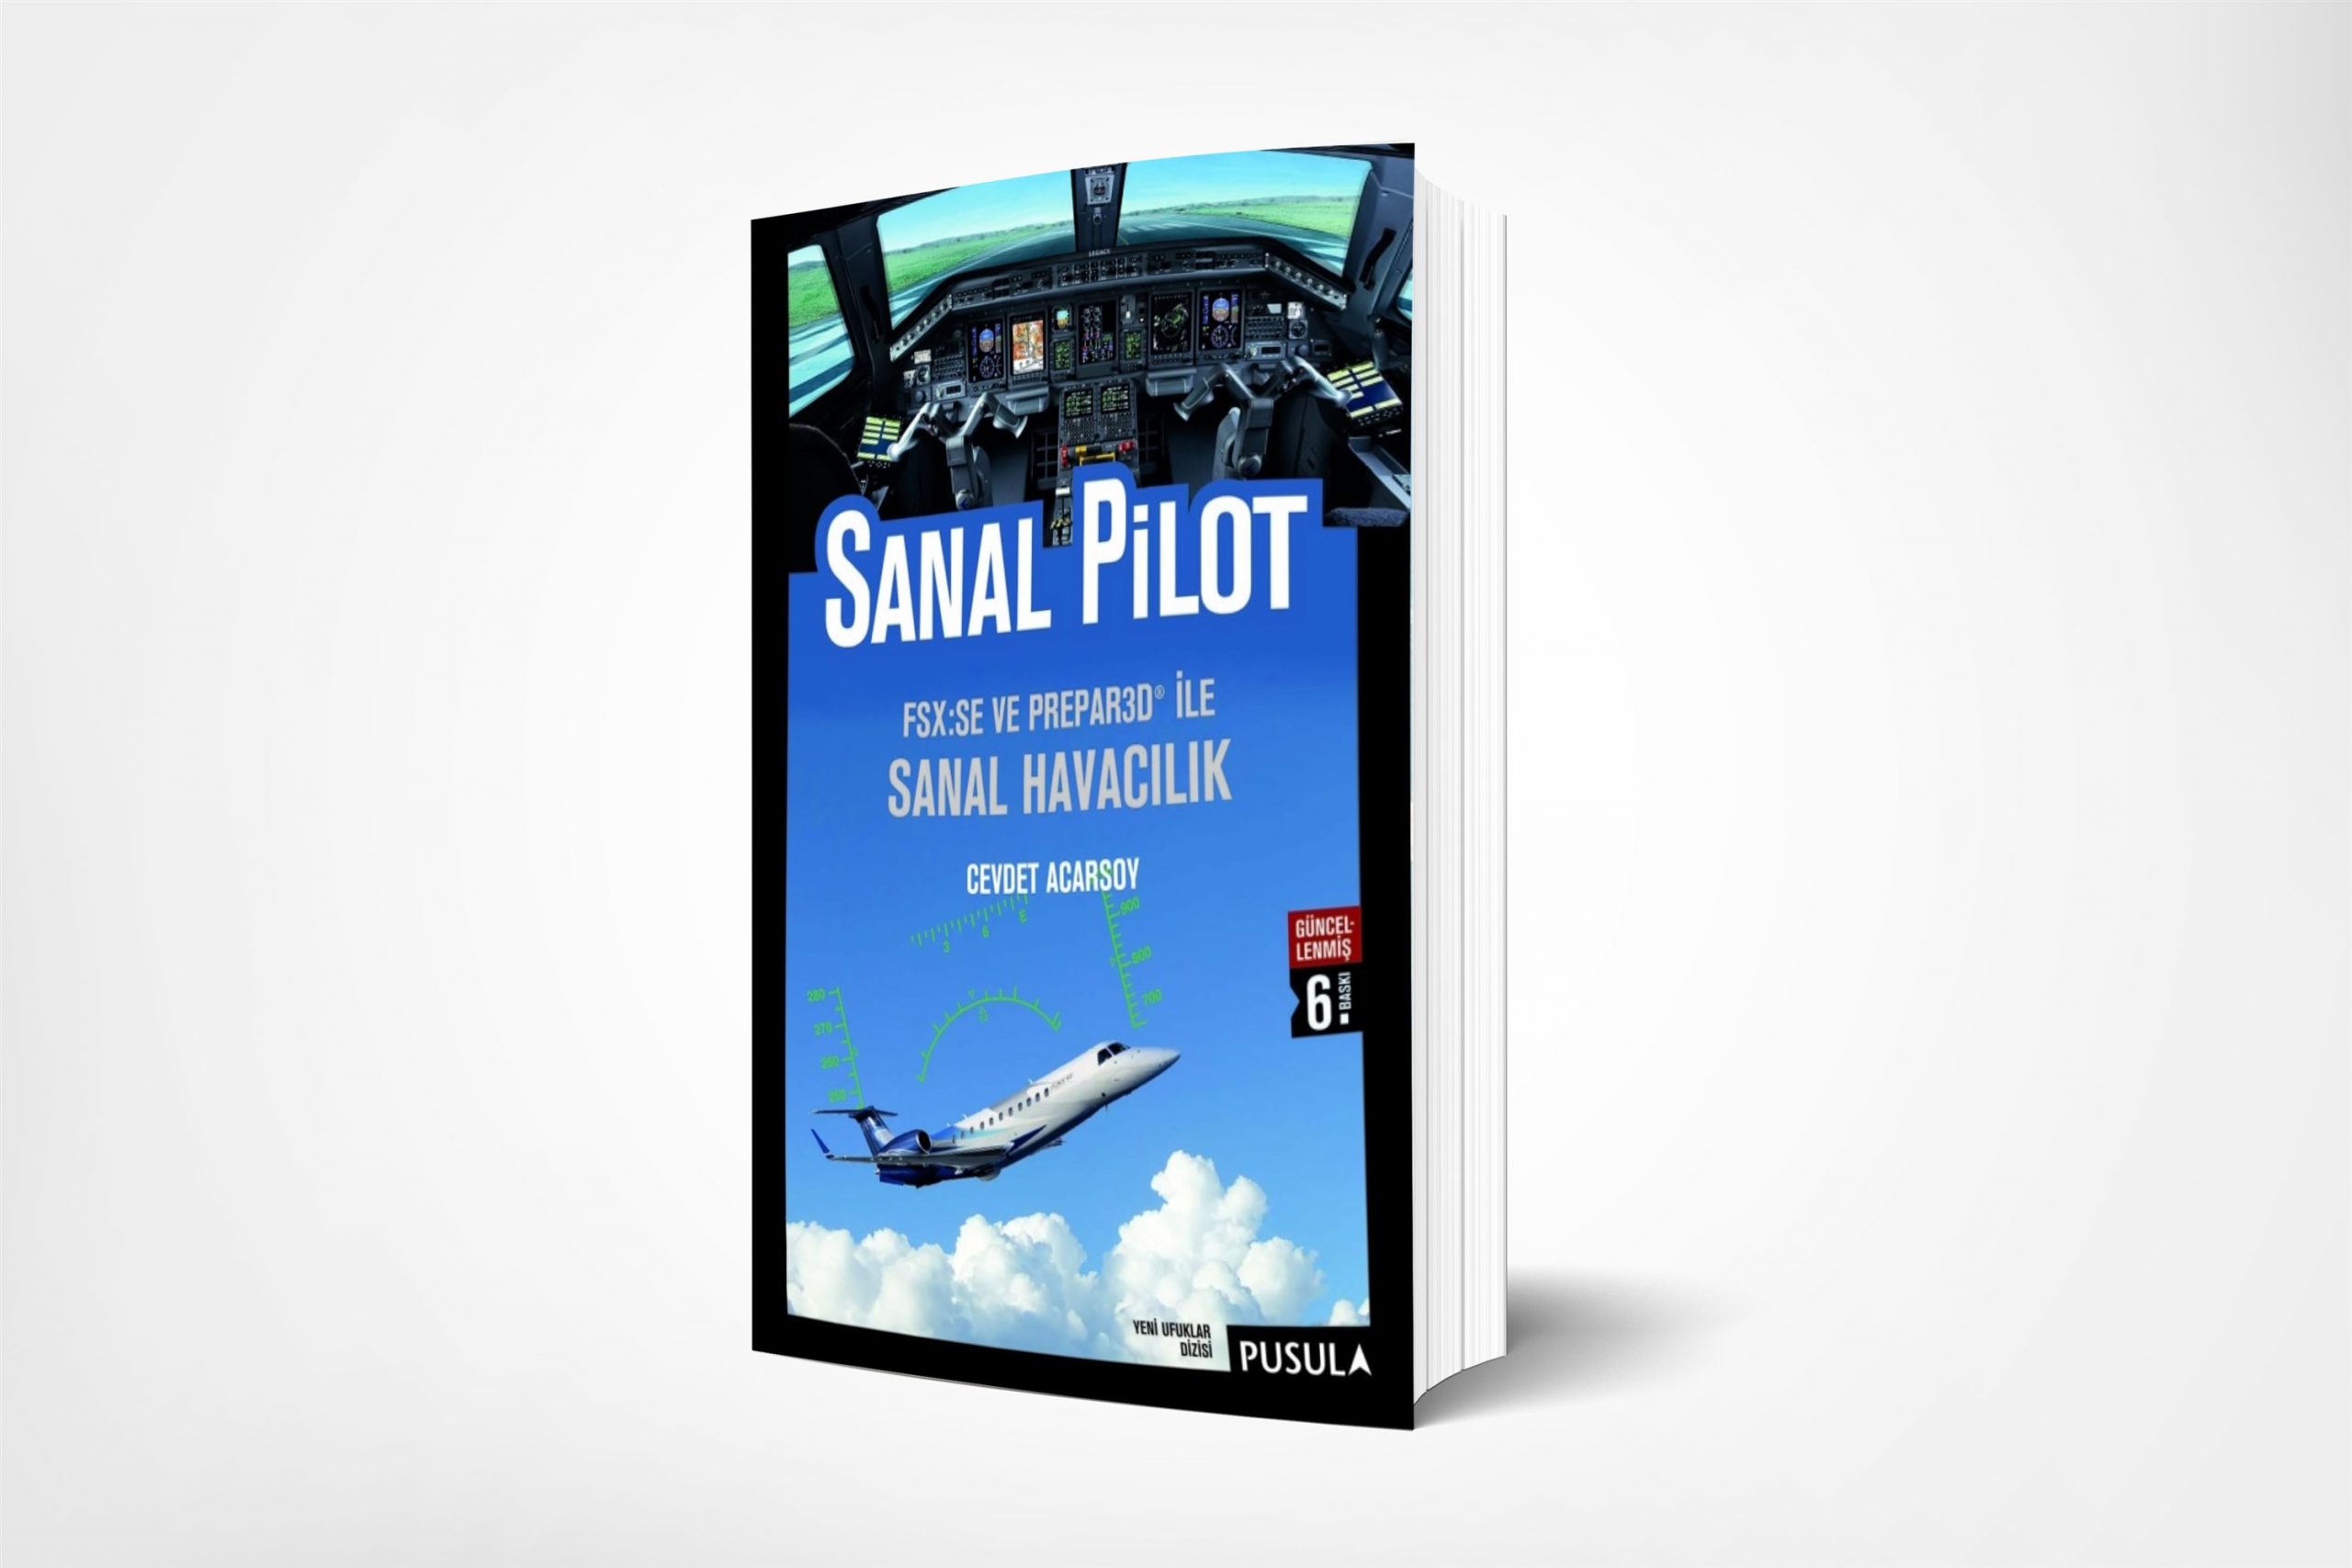 Sanal Pilot (Virtual Pilot)